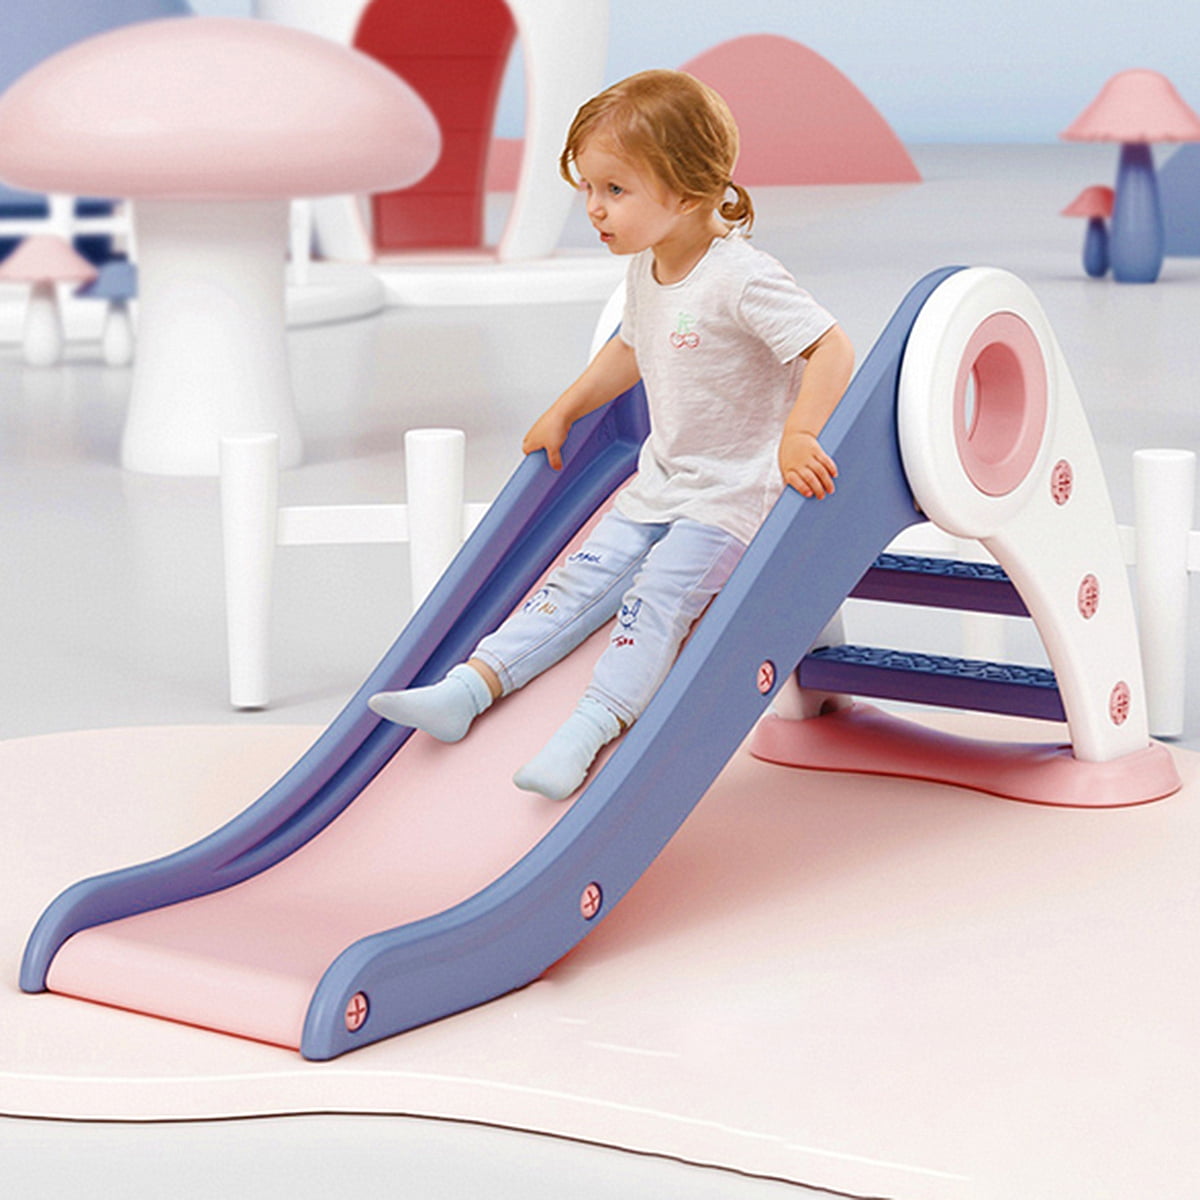 Kids Slide Play Set Home Backyard Climber Toddler Toy Playground Baby Gift 